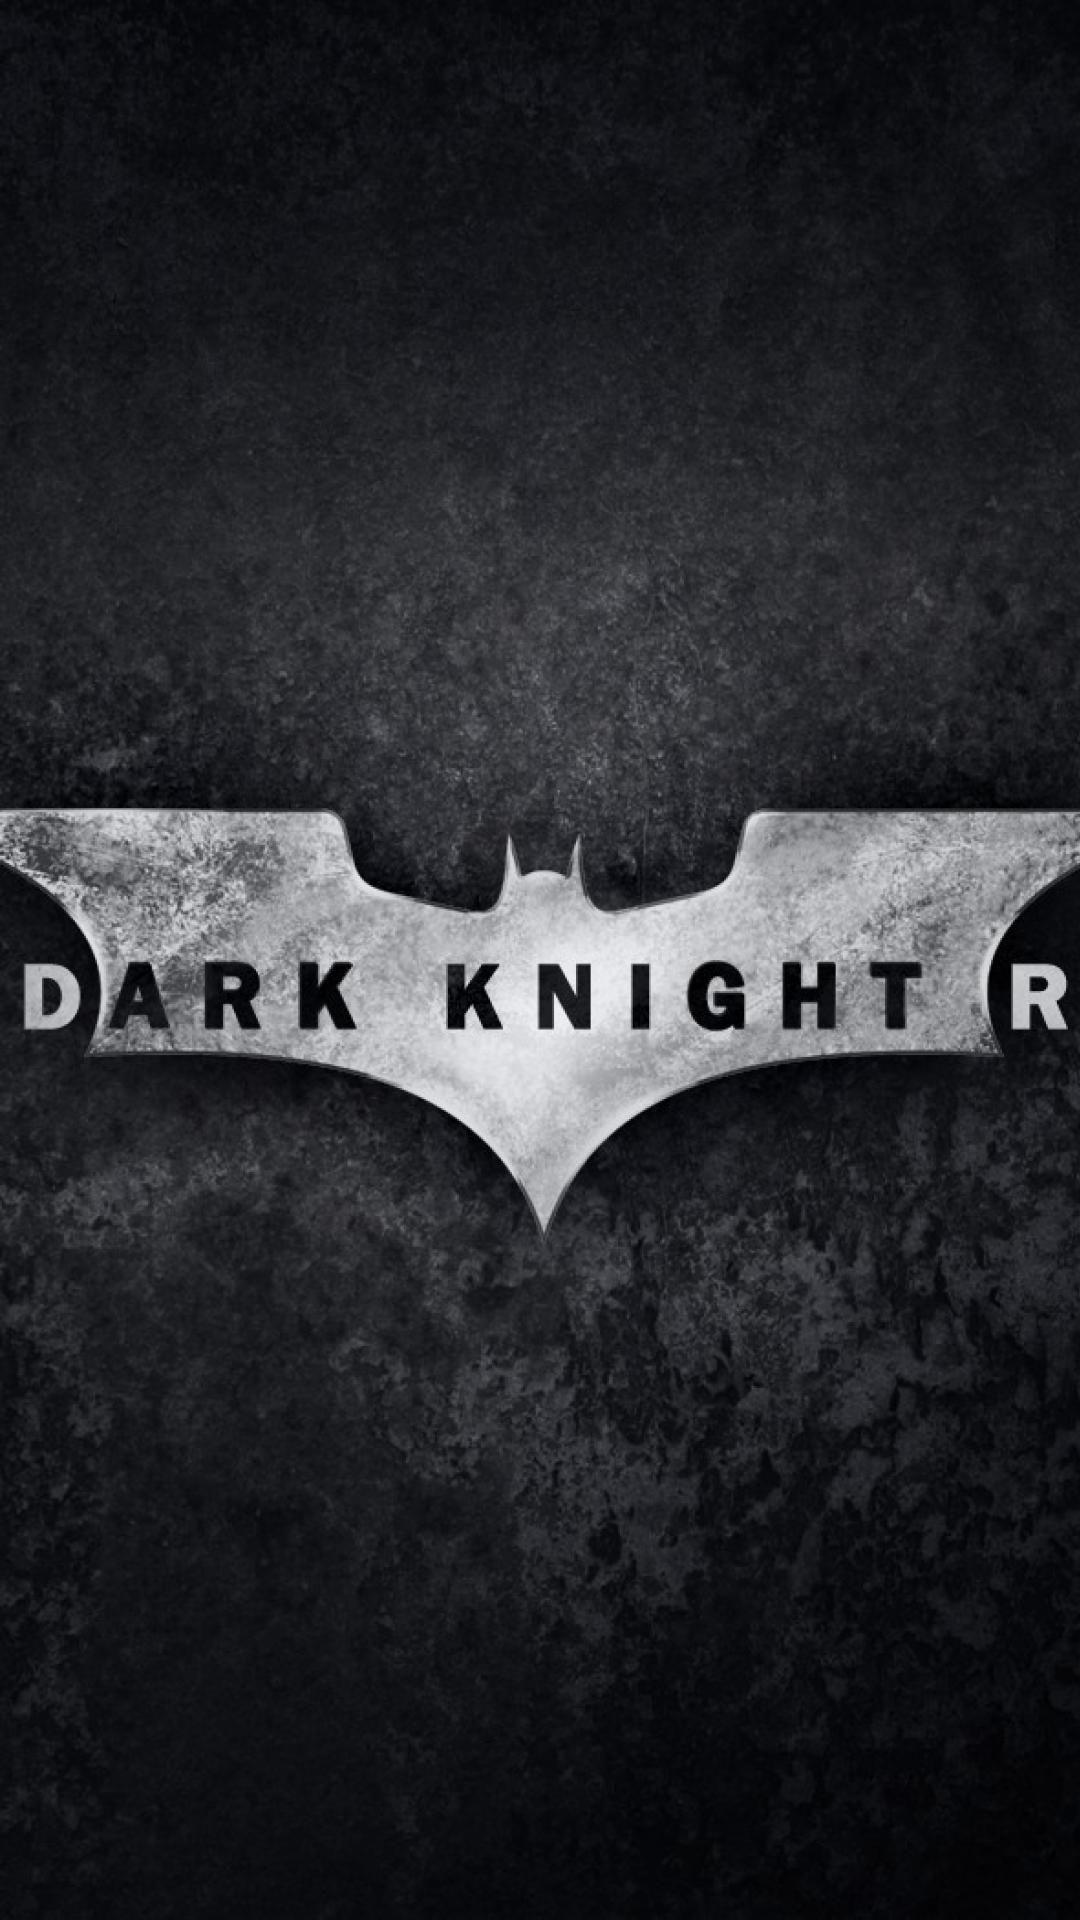 Batman logos the dark knight rises logo wallpaper